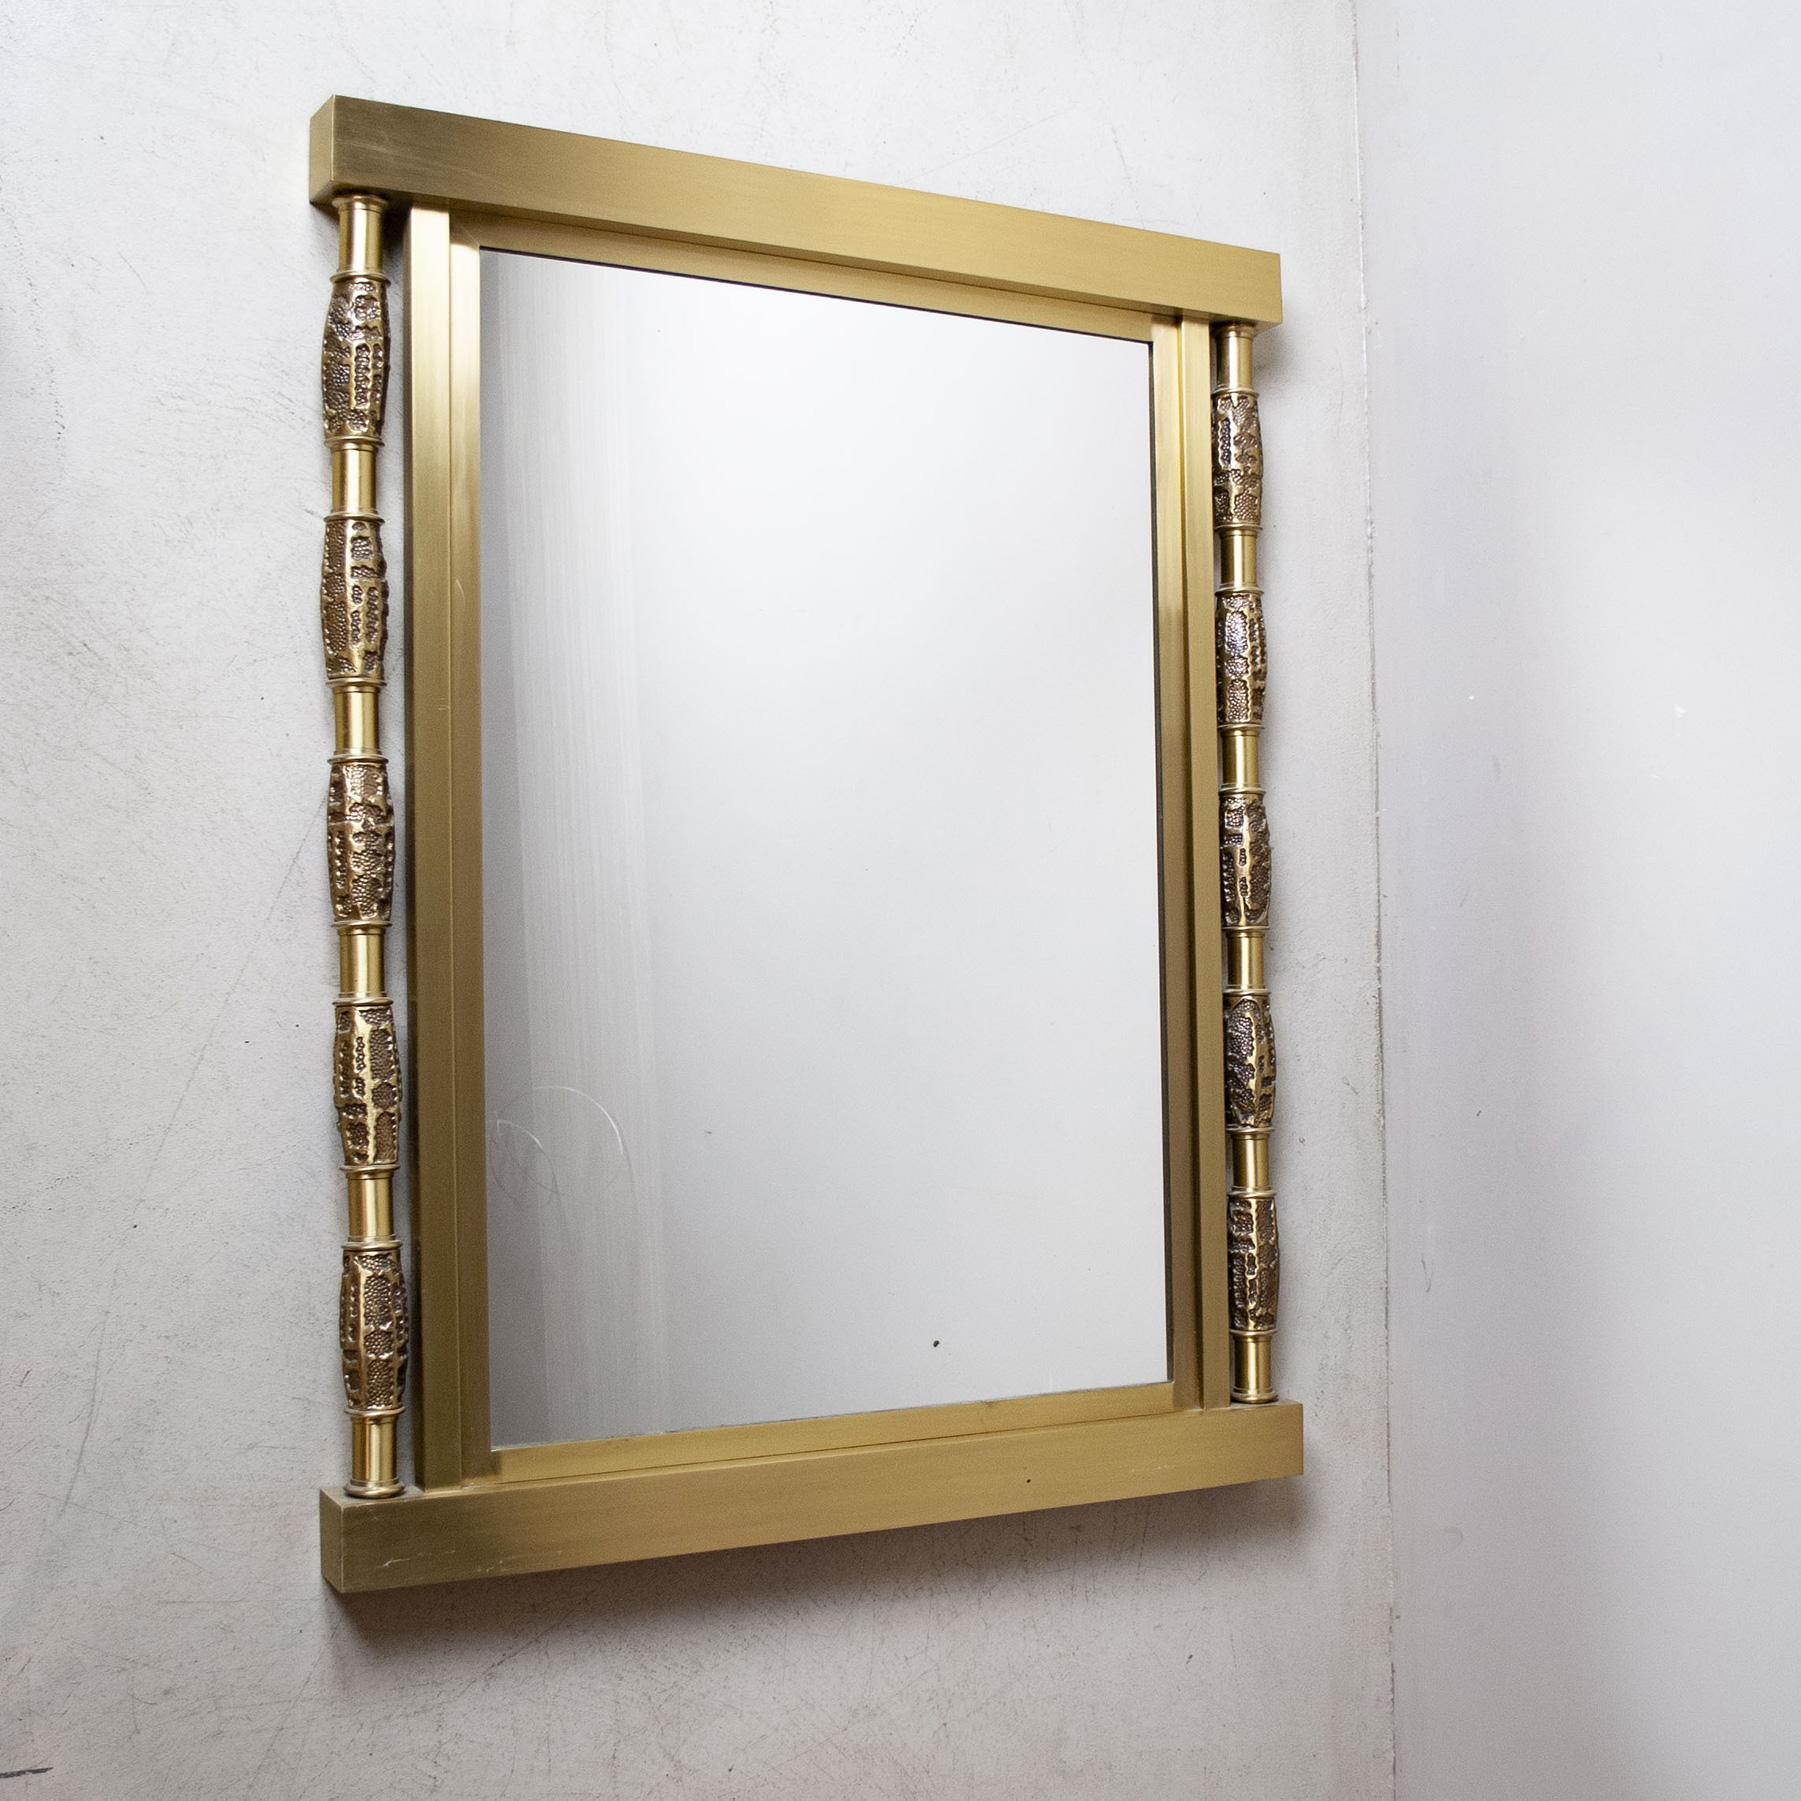 Italian Luciano Frigerio Mirror from the Seventies